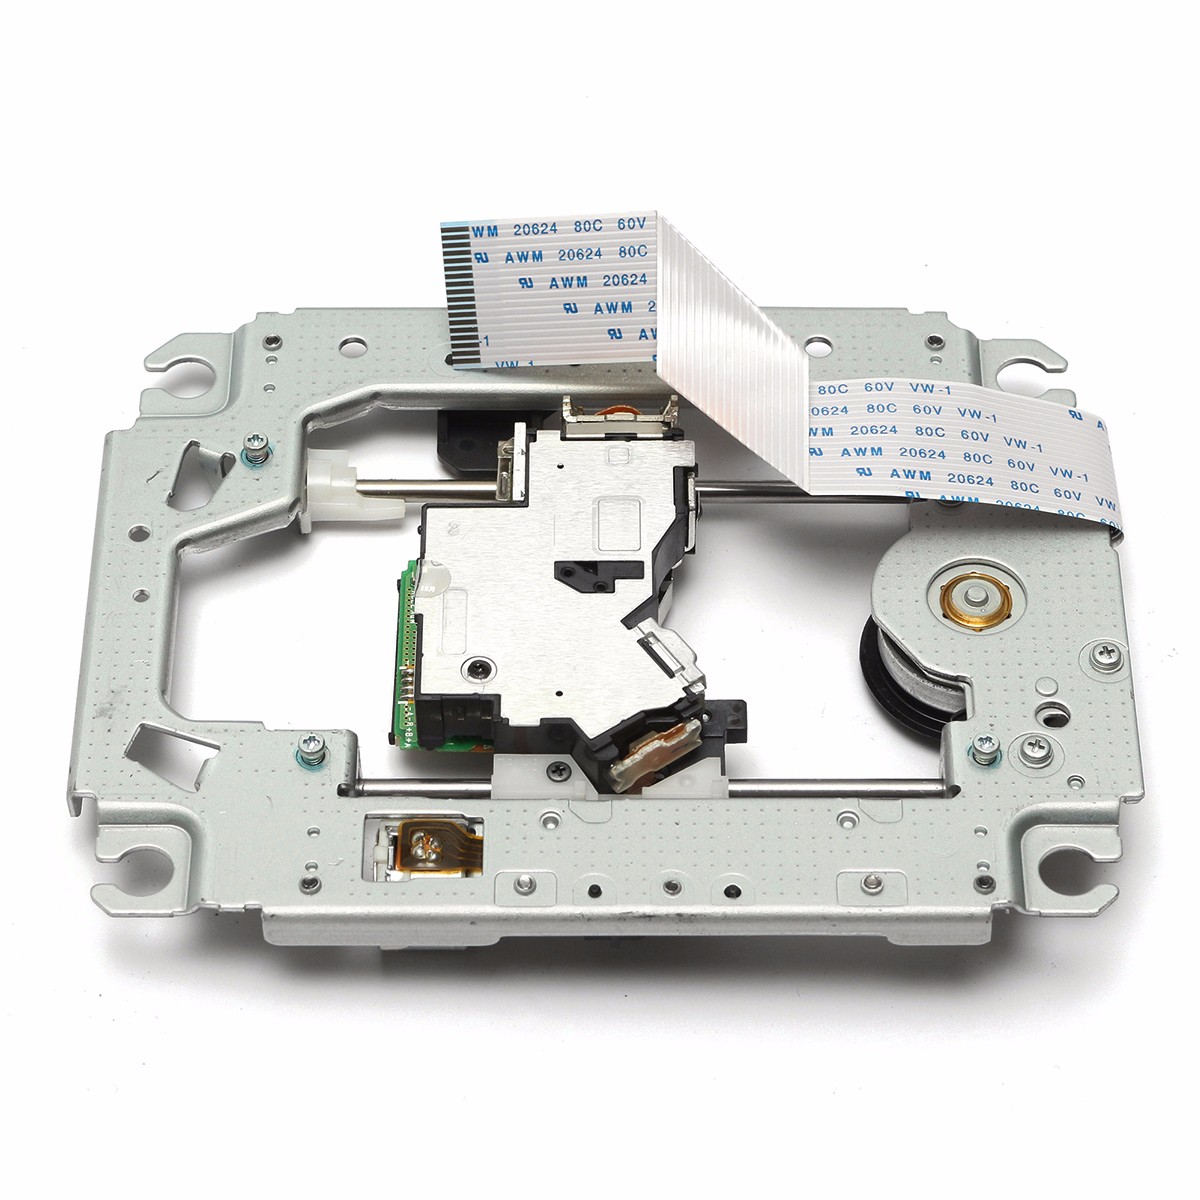 KES-410ACA/410A KEM-410ACA Laser Lens & Deck for Play Station 3 for PS3 Parts 2